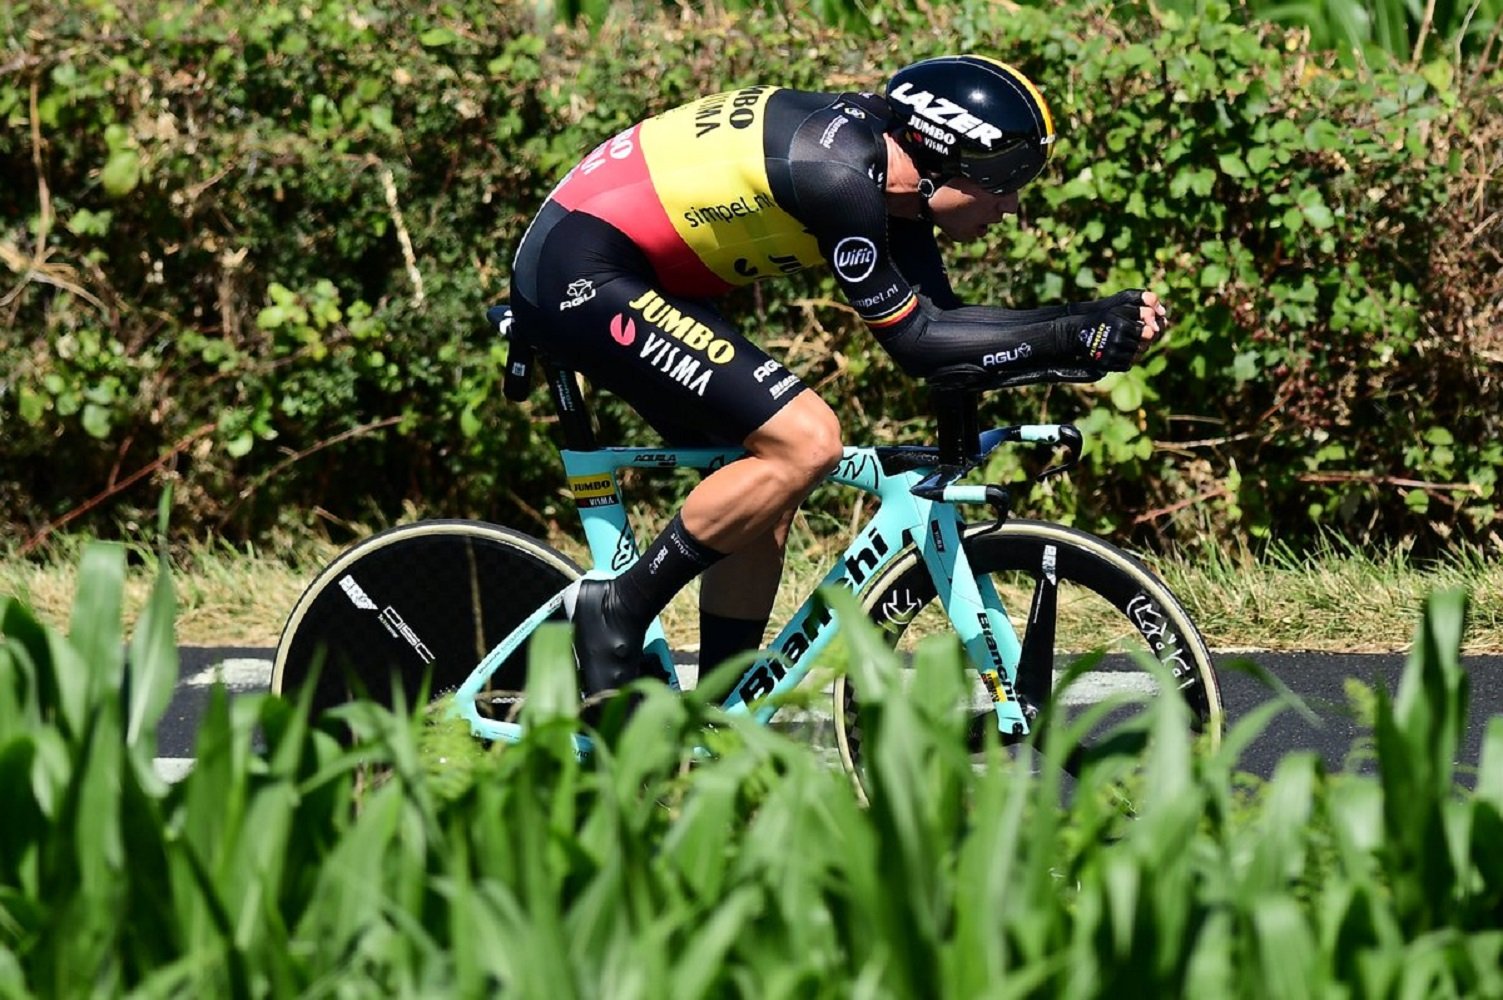 Escalofriante caída de la joven estrella belga, Van Aert, en el Tour de Francia